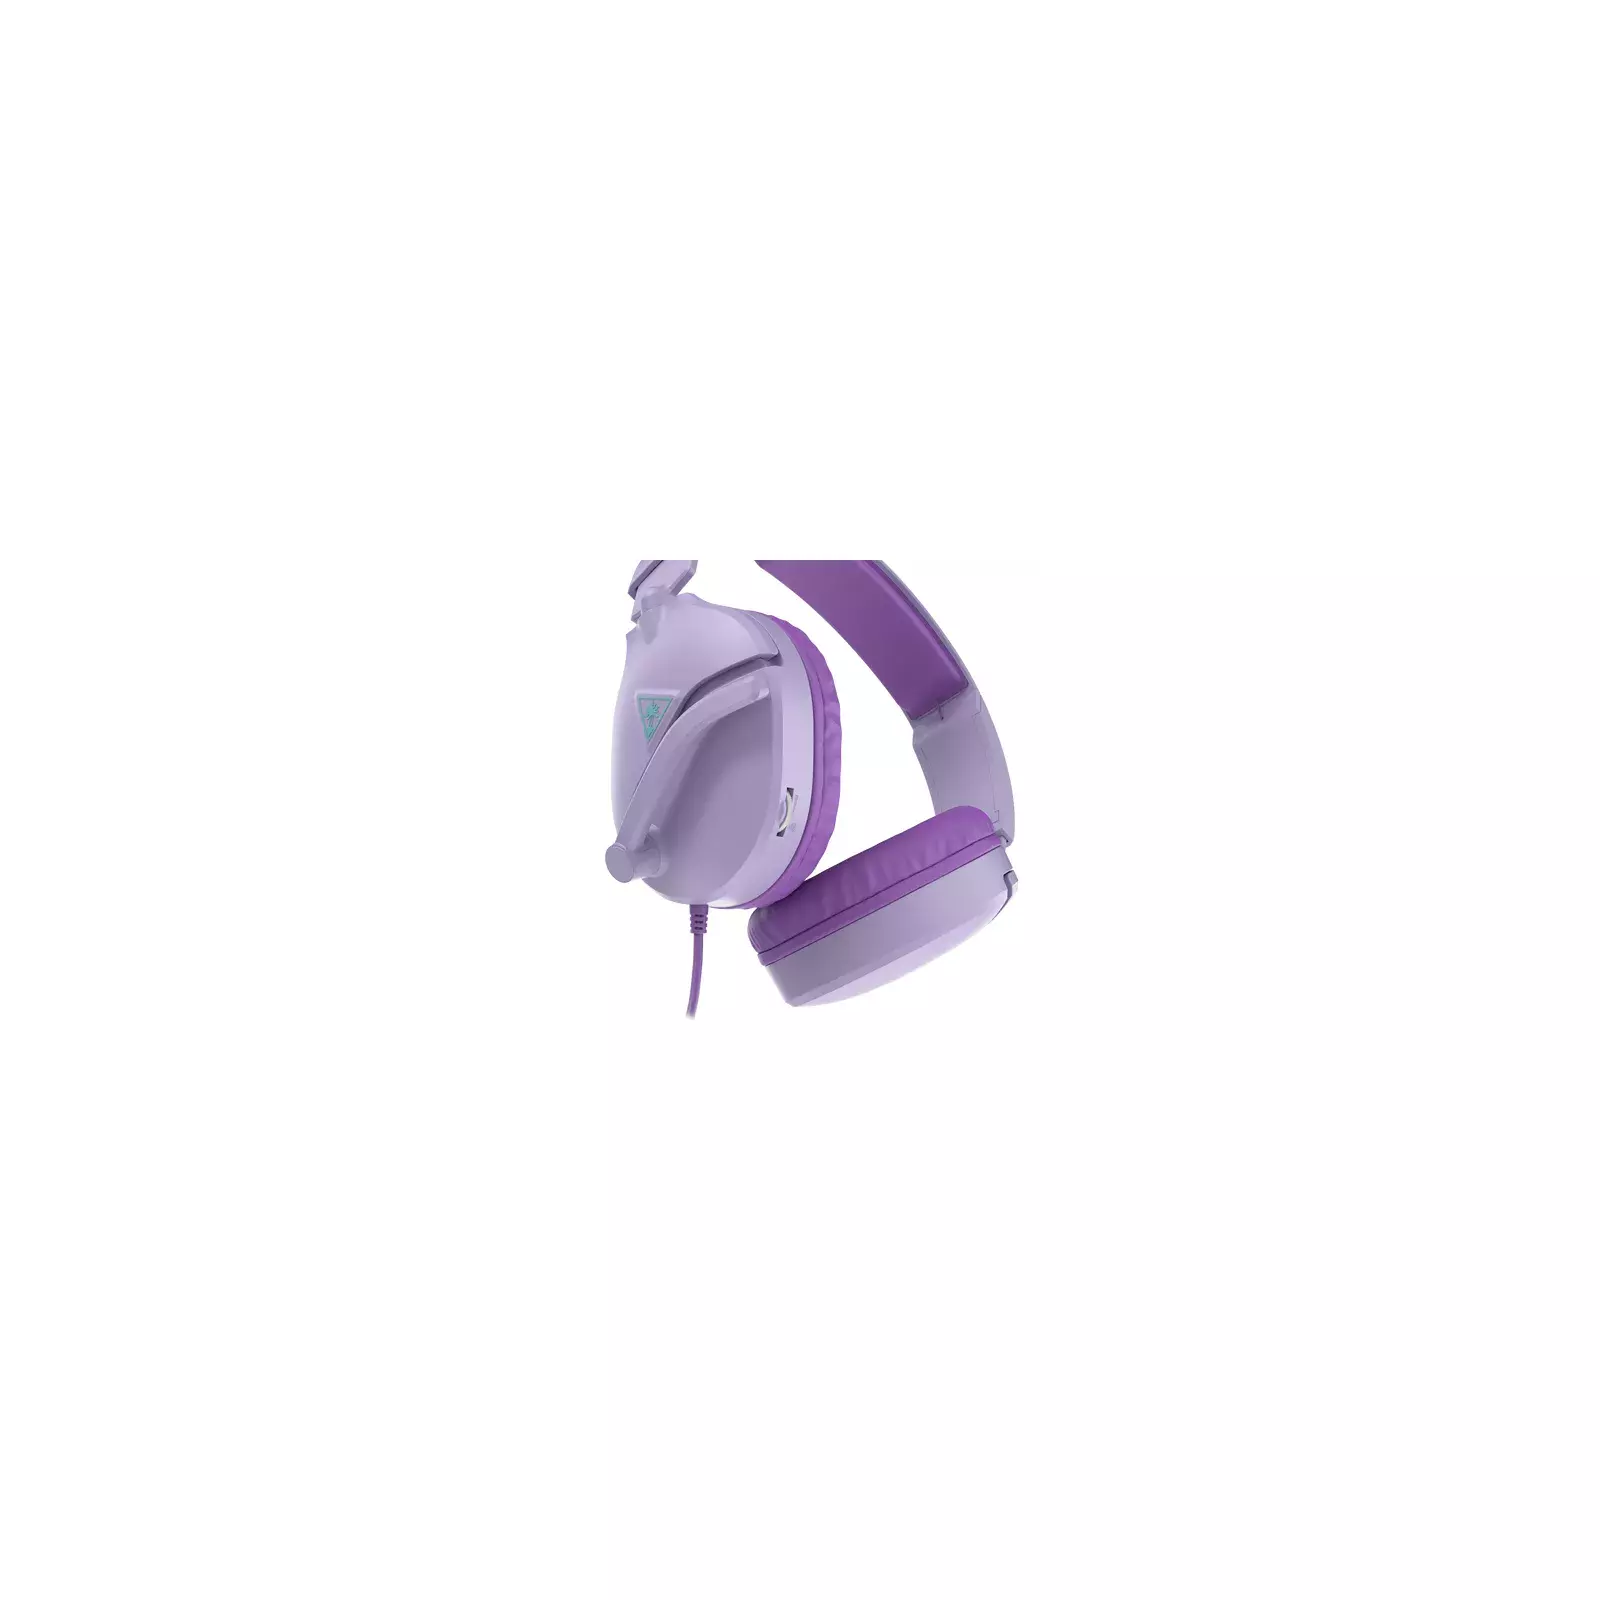 Recon 70 Lavender Multiplatform Gaming Headset